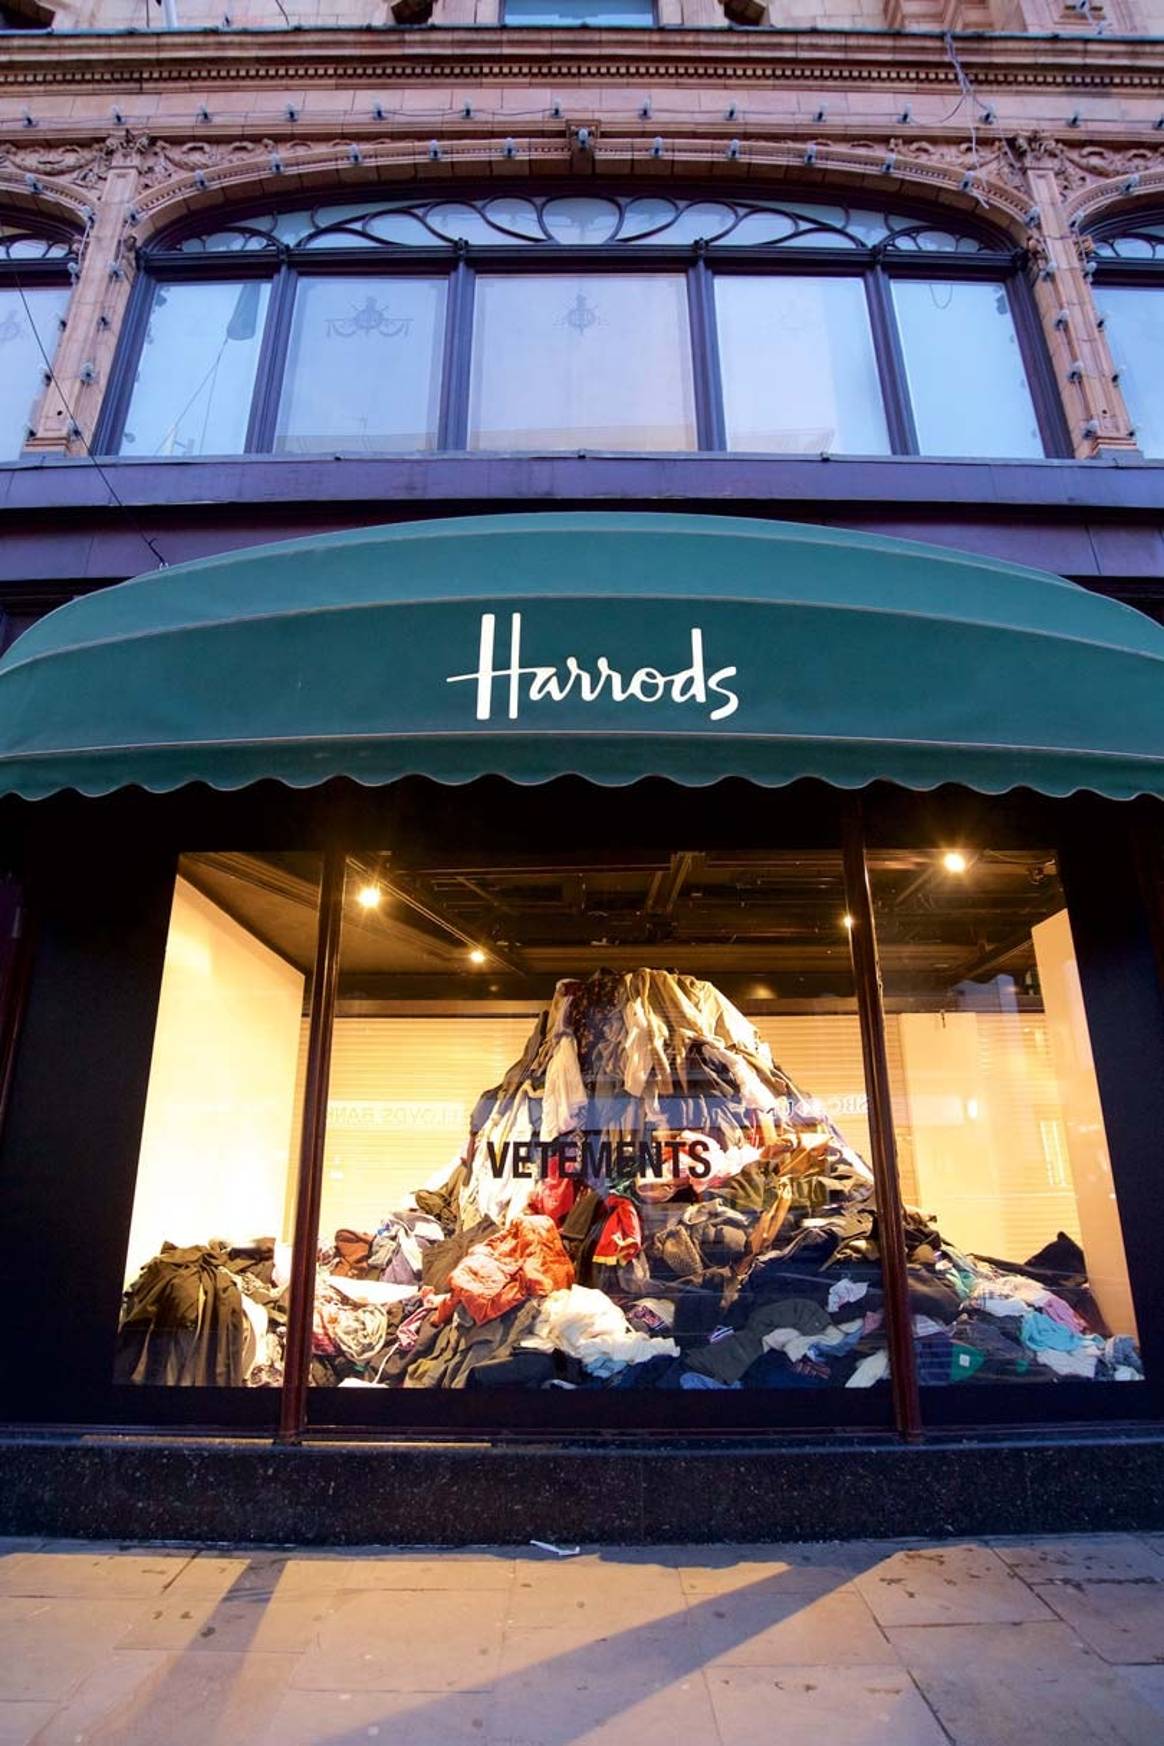 In Bildern: Vetements-Schaufenster bei Harrods